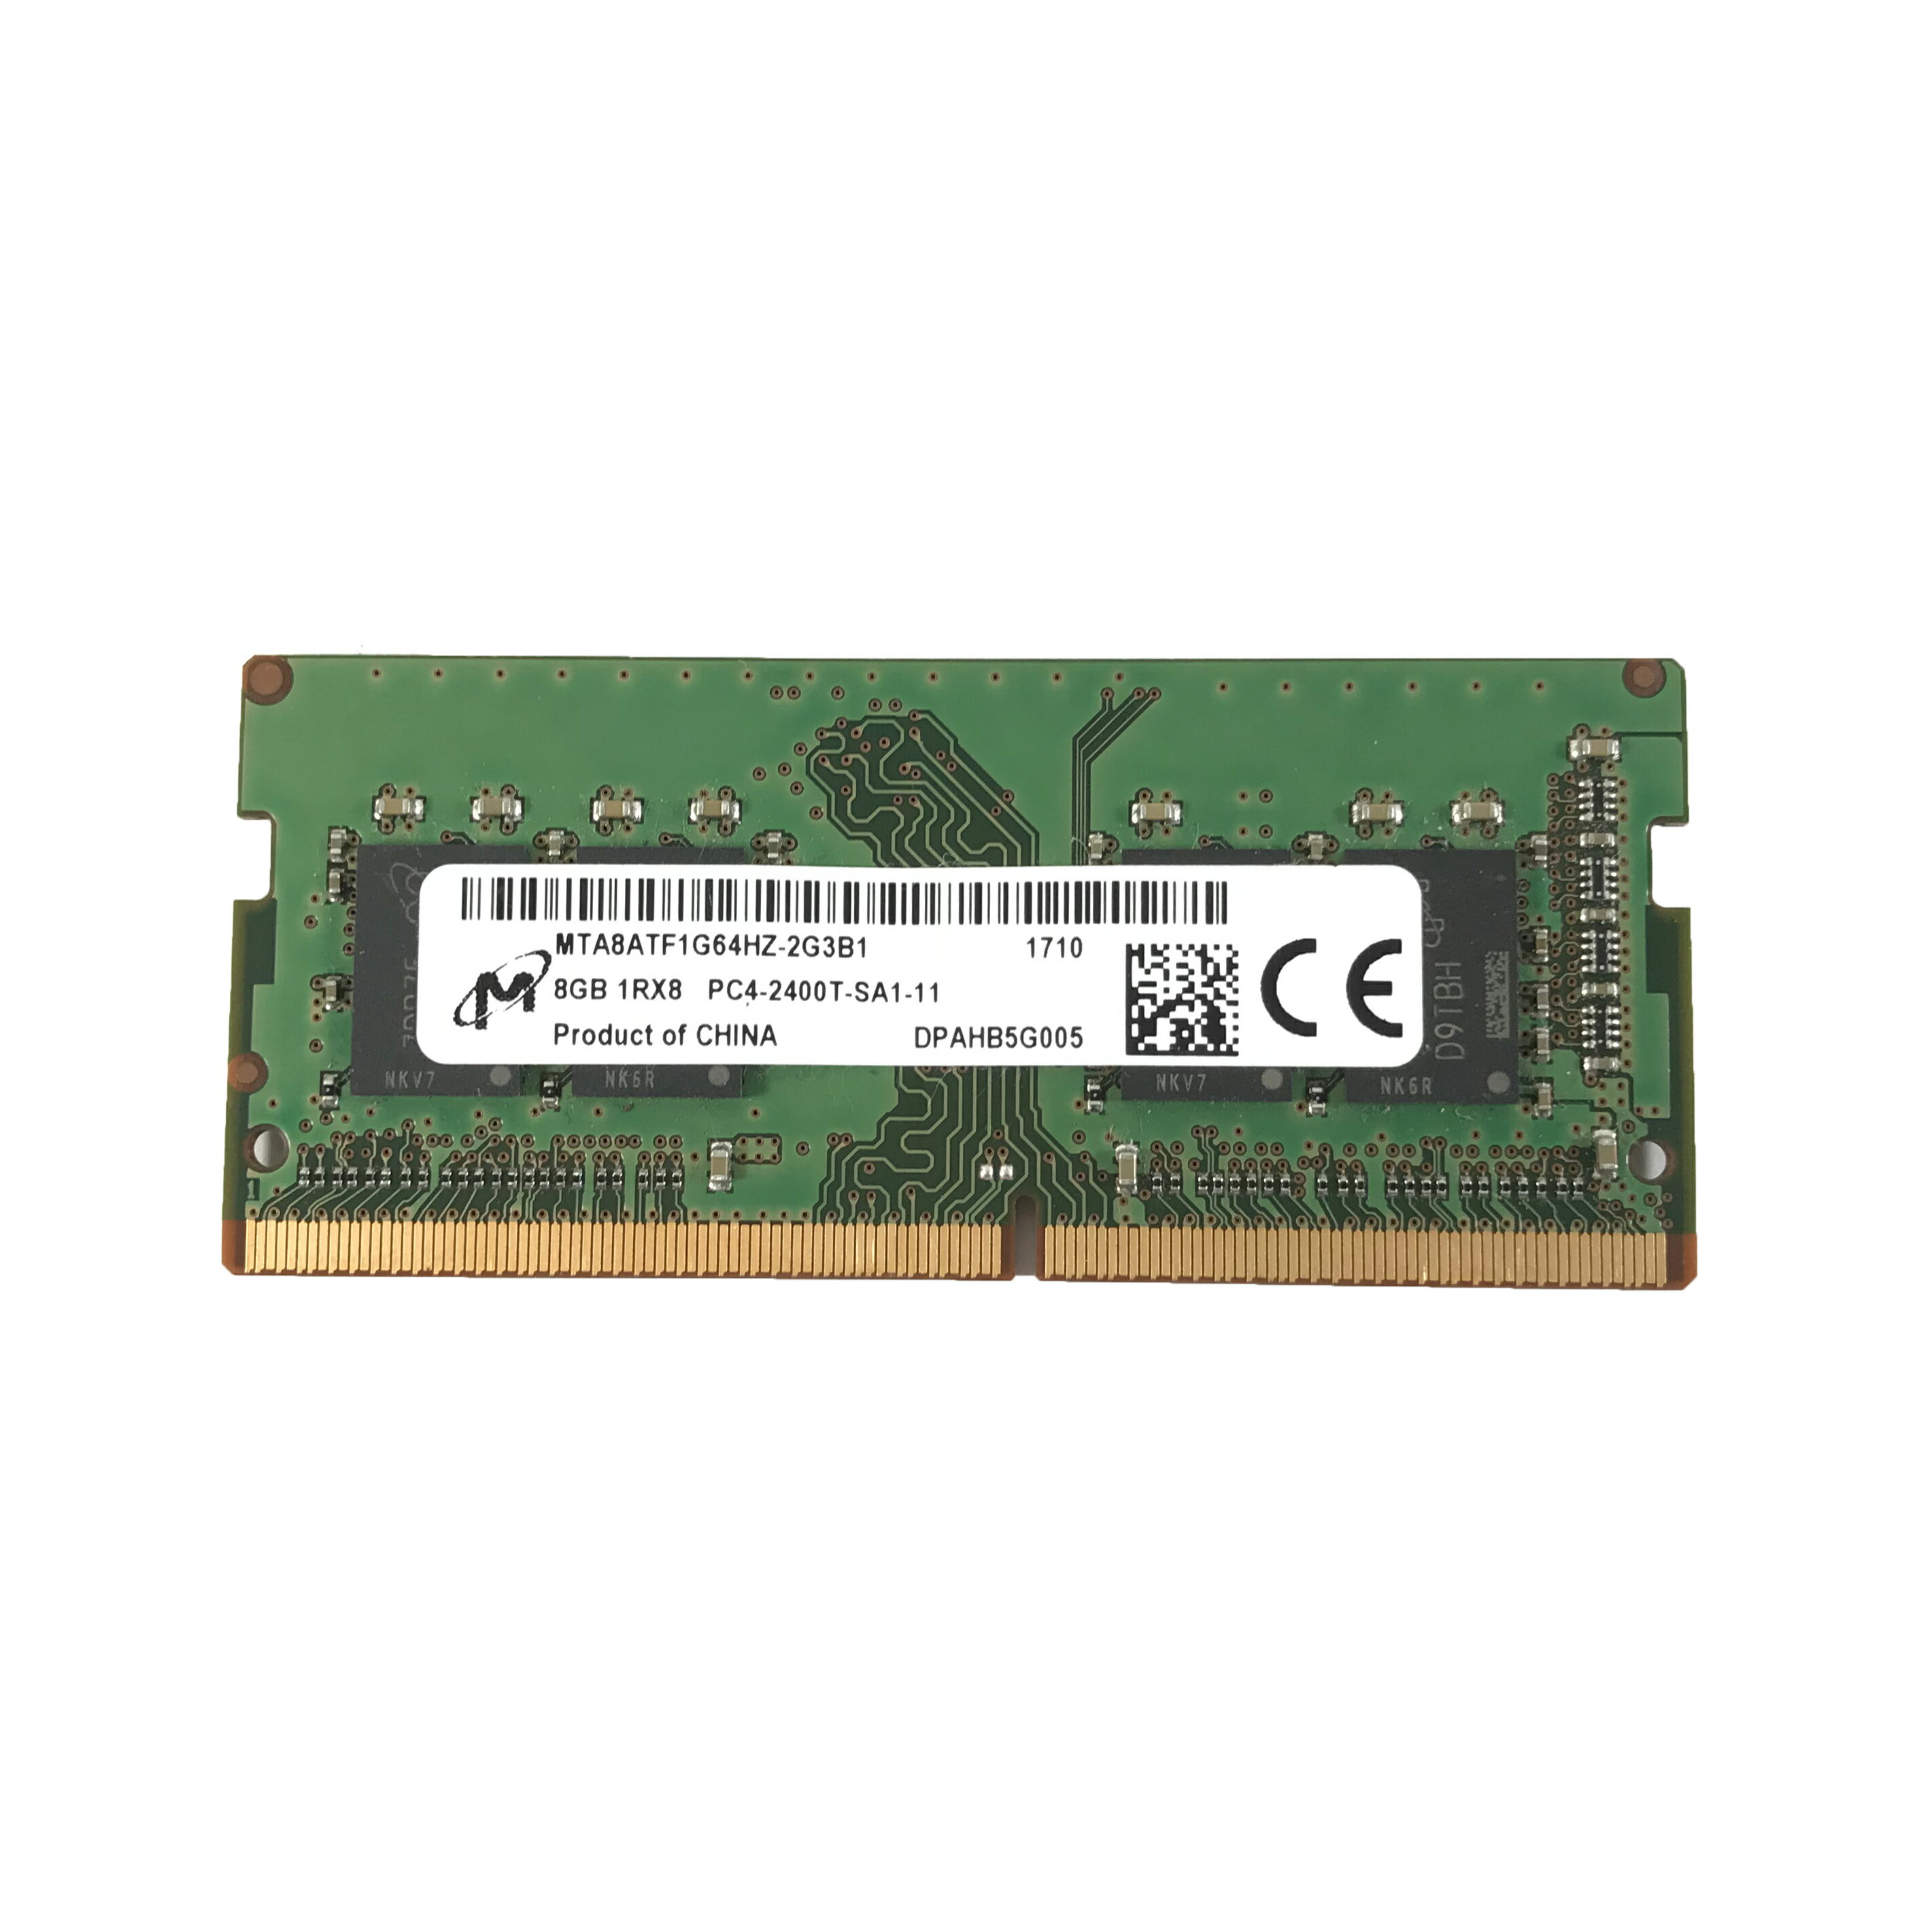 Micron 8GB 1Rx8 PC4-2400T メモリ 1点 マイクロン ノートパソコン用メモリ/ミニデスクトップpc用メモリ/ 増設メモリ 型番：MTA8ATF1G64HZ-2G3B1 両面実装 (1Rx8)★送料無料